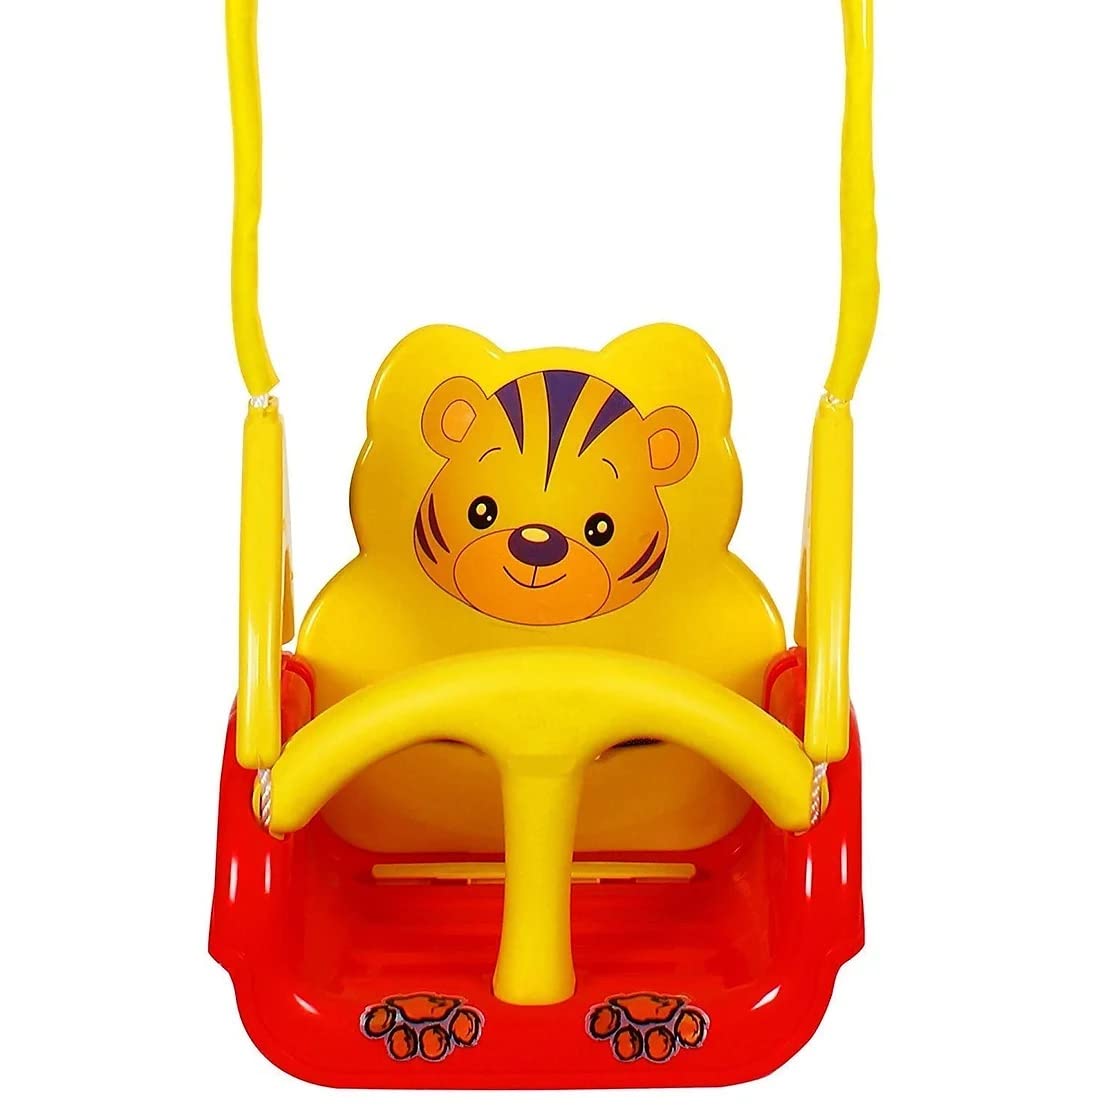 Panda Swing Toy for Kids(Red)